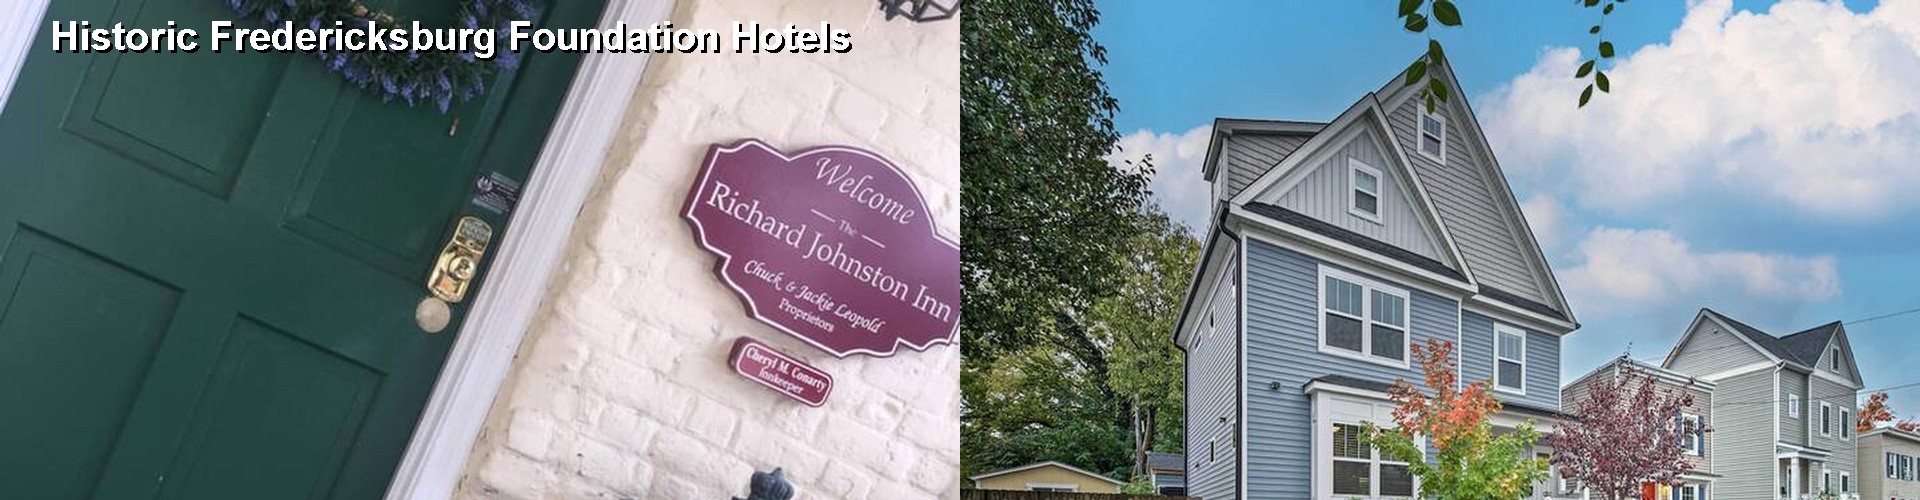 5 Best Hotels near Historic Fredericksburg Foundation